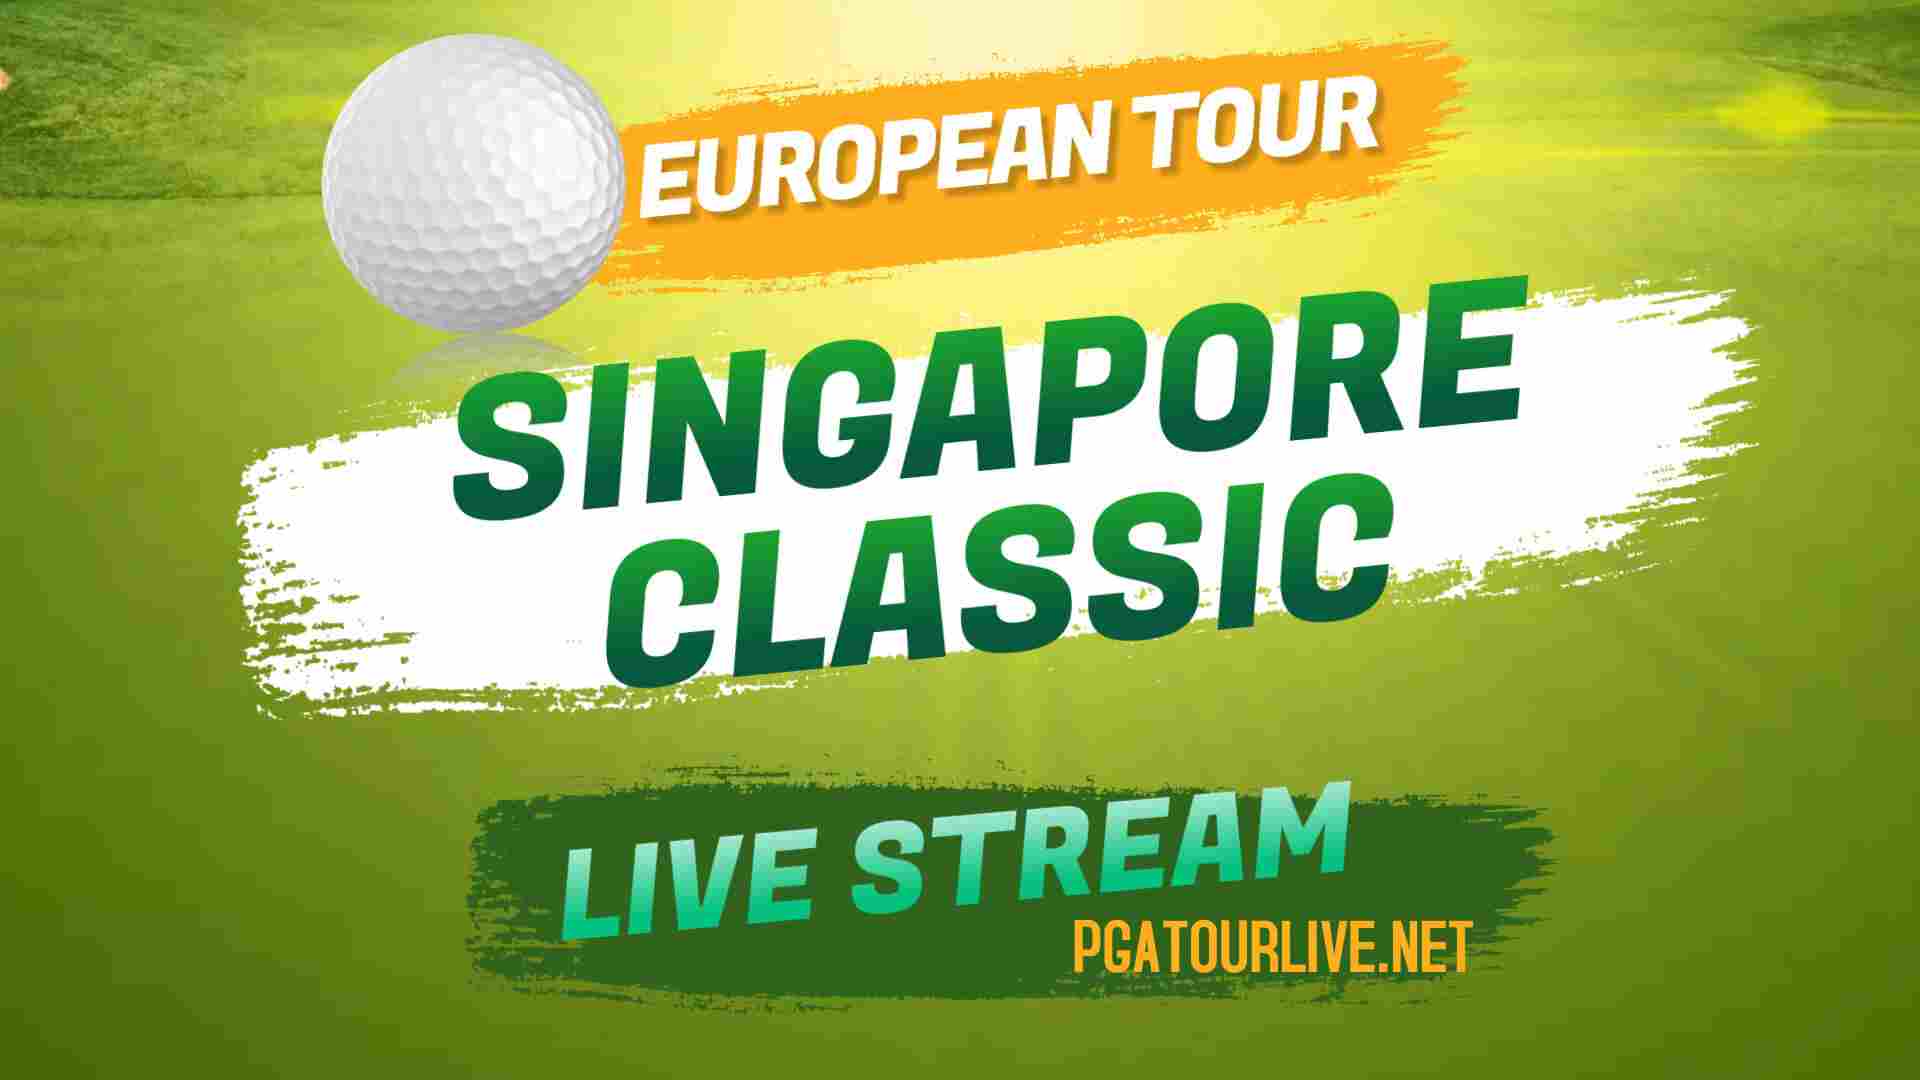 Singapore Classic Live Stream European Tour